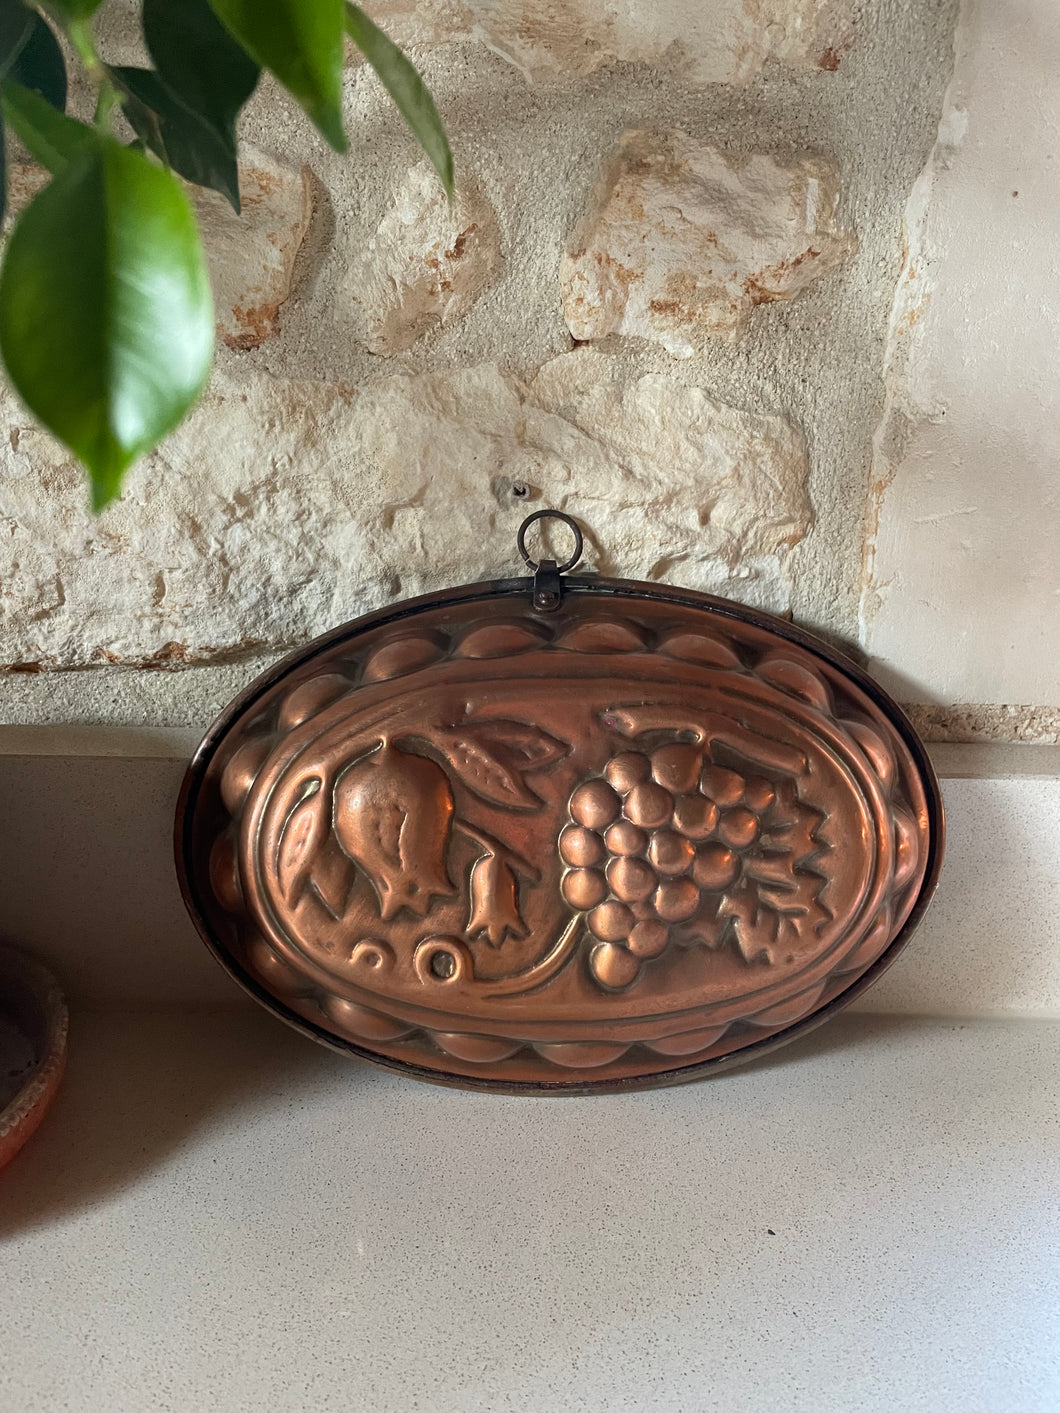 Antique Copper Mold